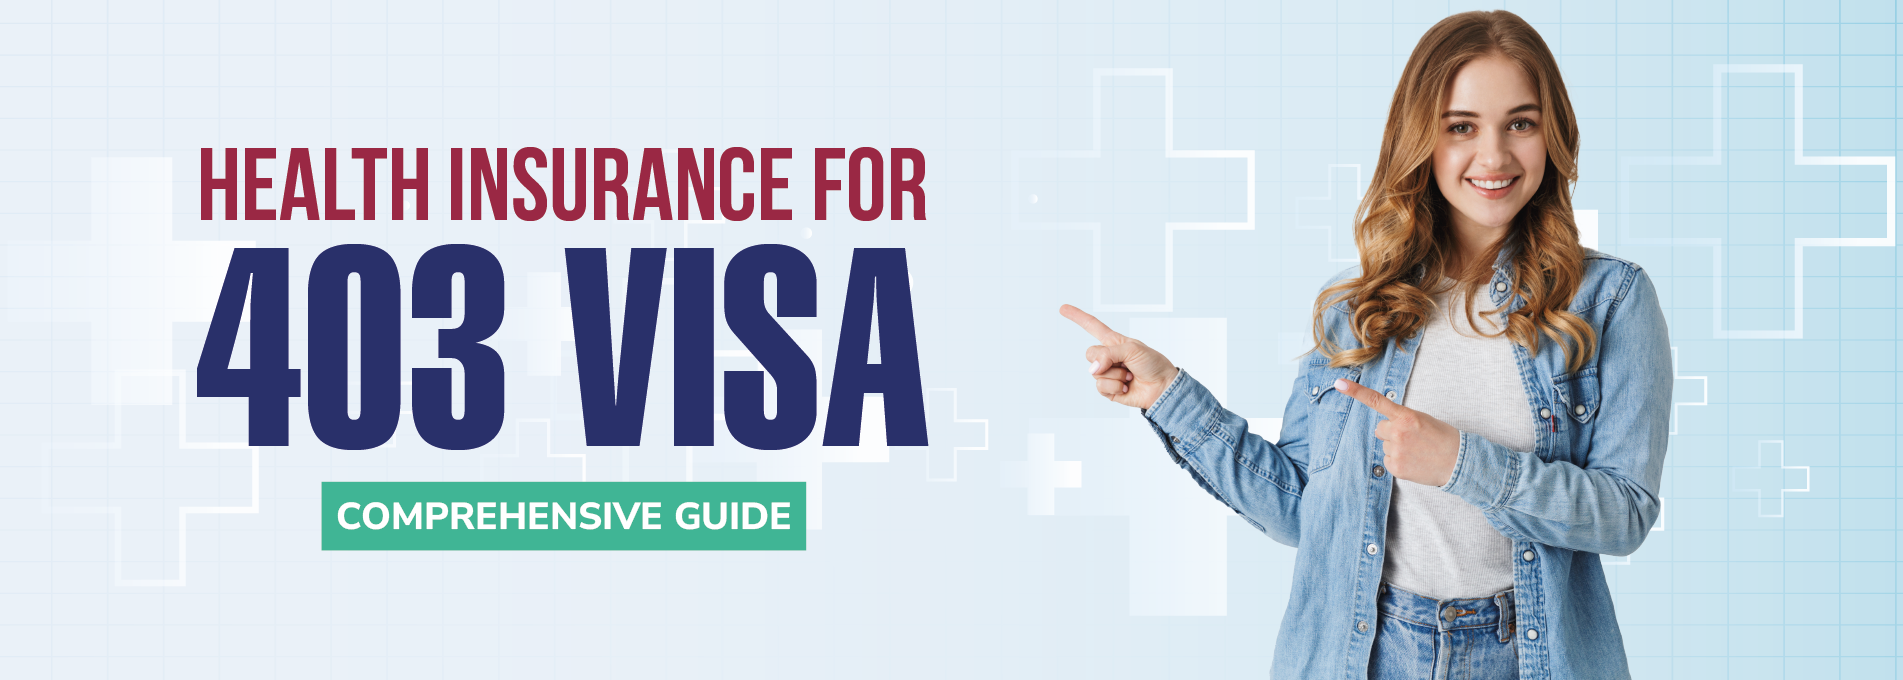 Health Insurance for 403 Visa: Comprehensive Guide